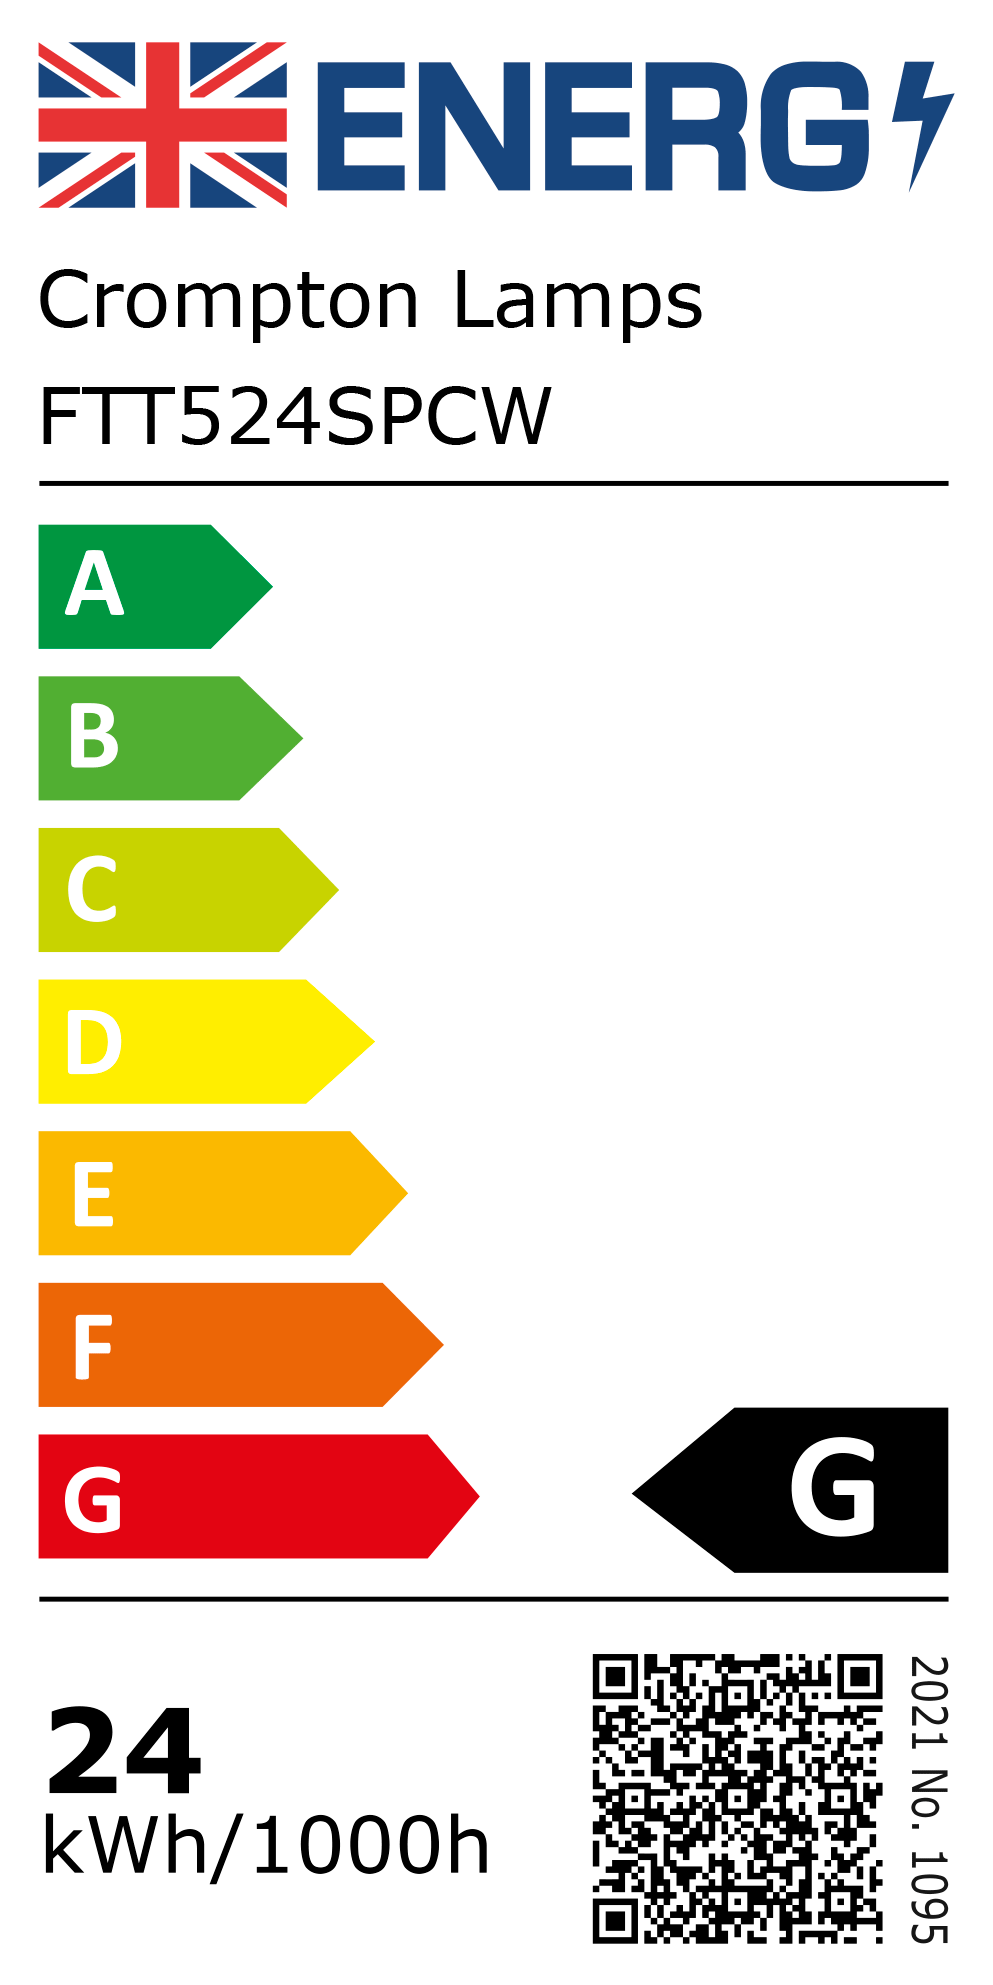 New 2021 Energy Rating Label: Stock Code FTT524SPCW